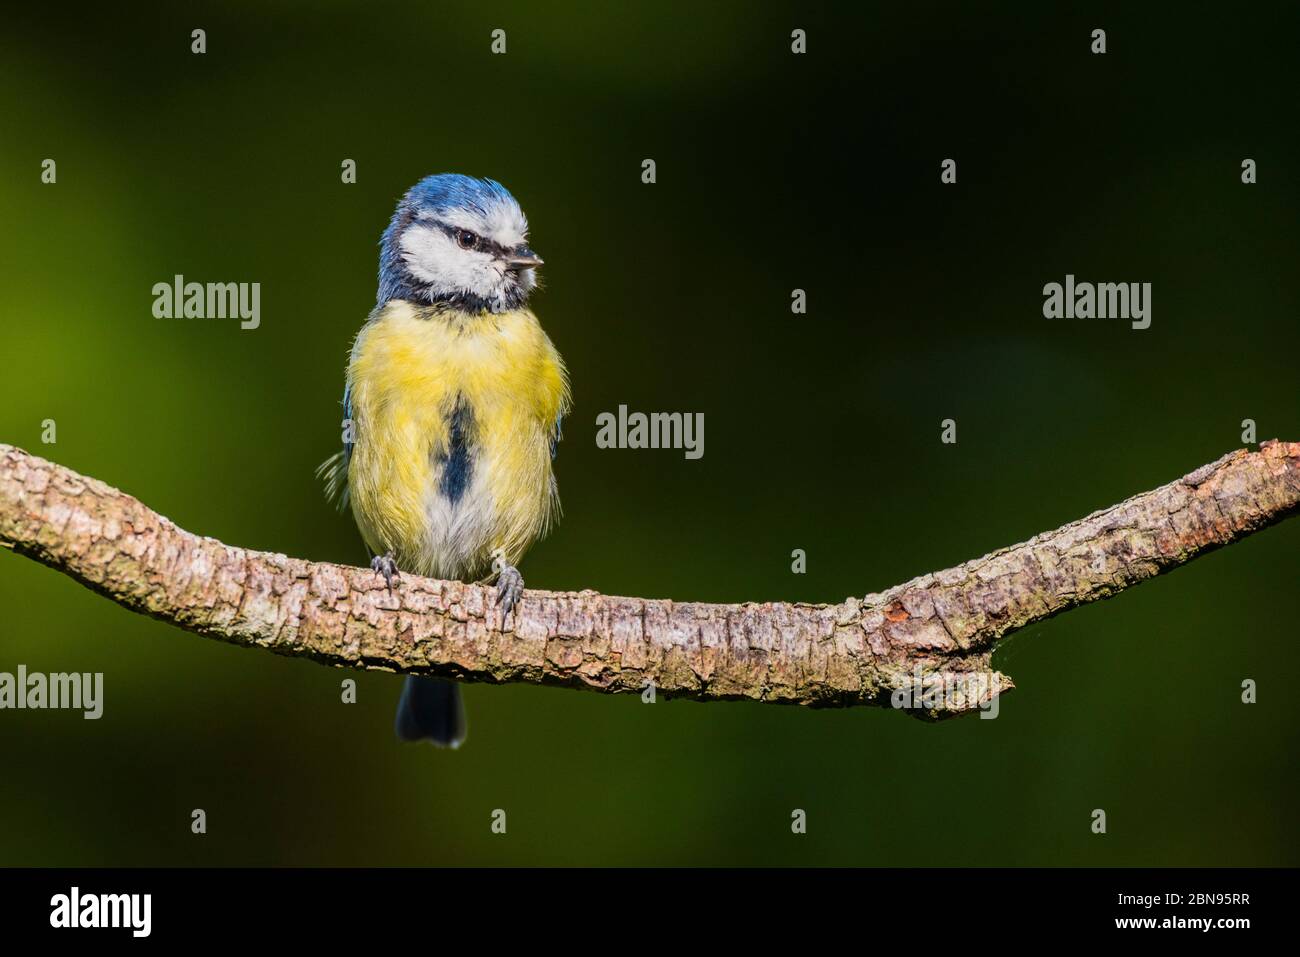 A Blue Tit (Parus caeruleus) in the uk Stock Photo